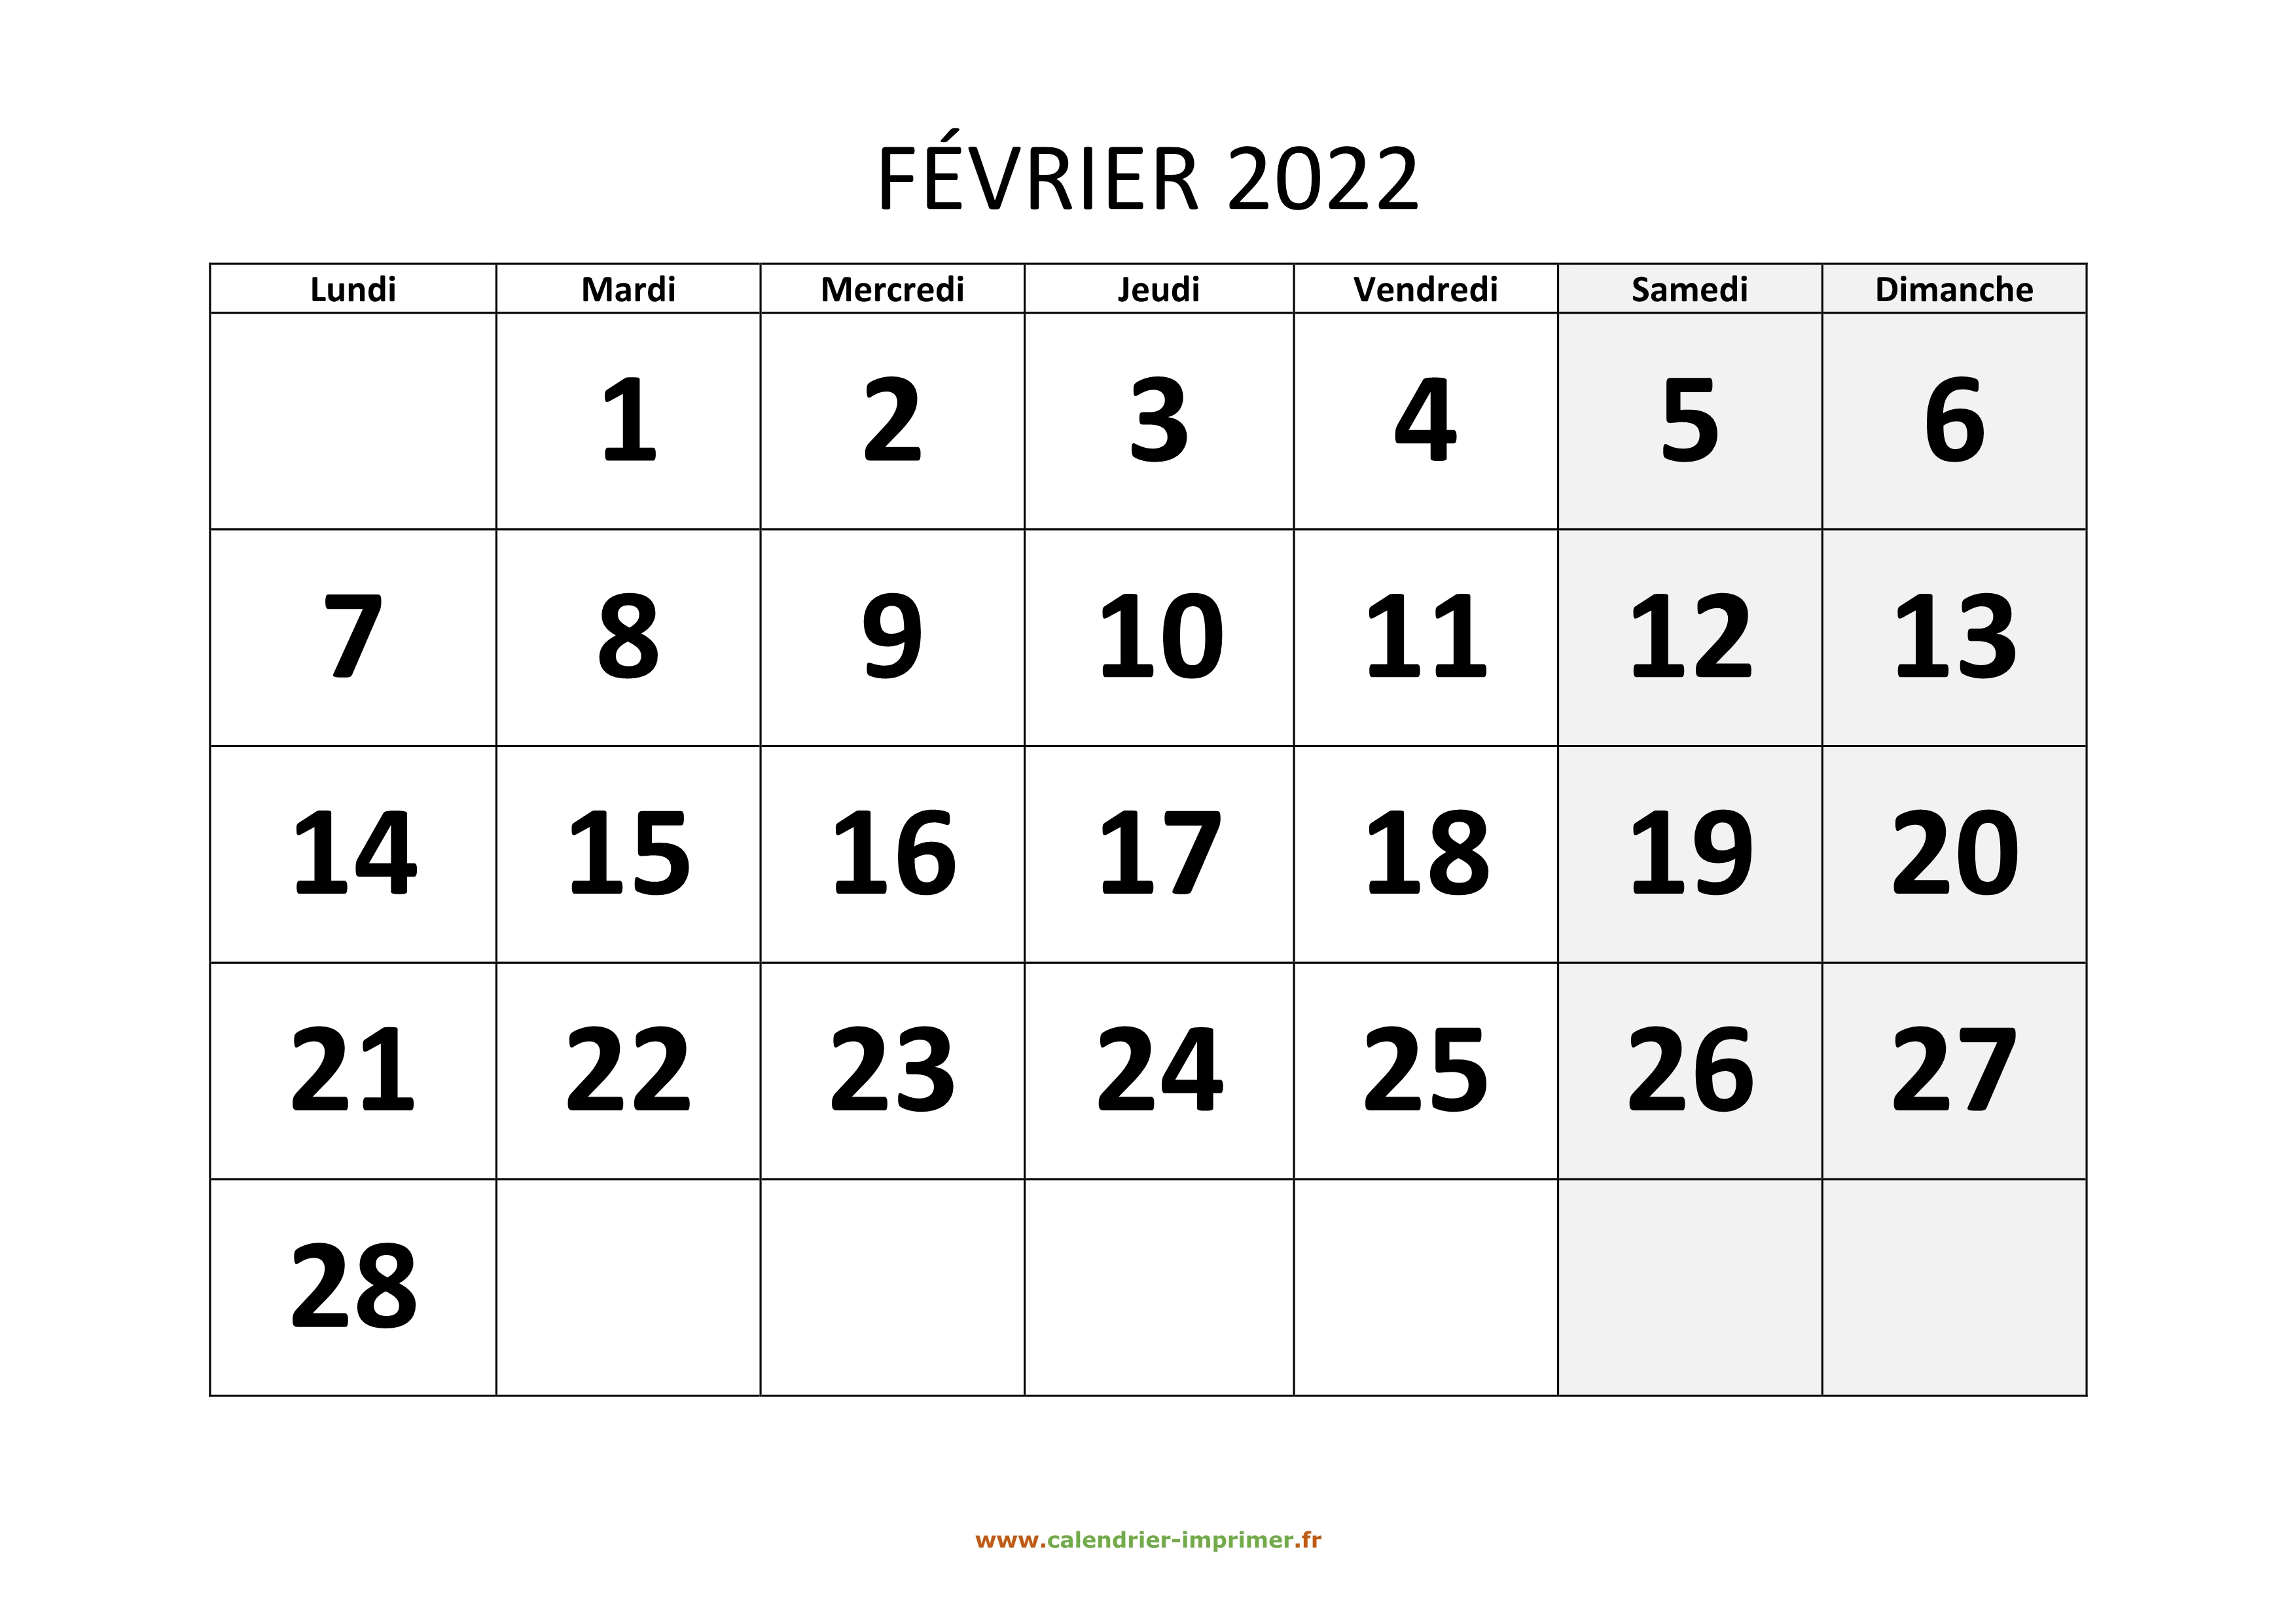 Calendrier Fevrier 2022 à Imprimer Calendrier Février 2022 à imprimer